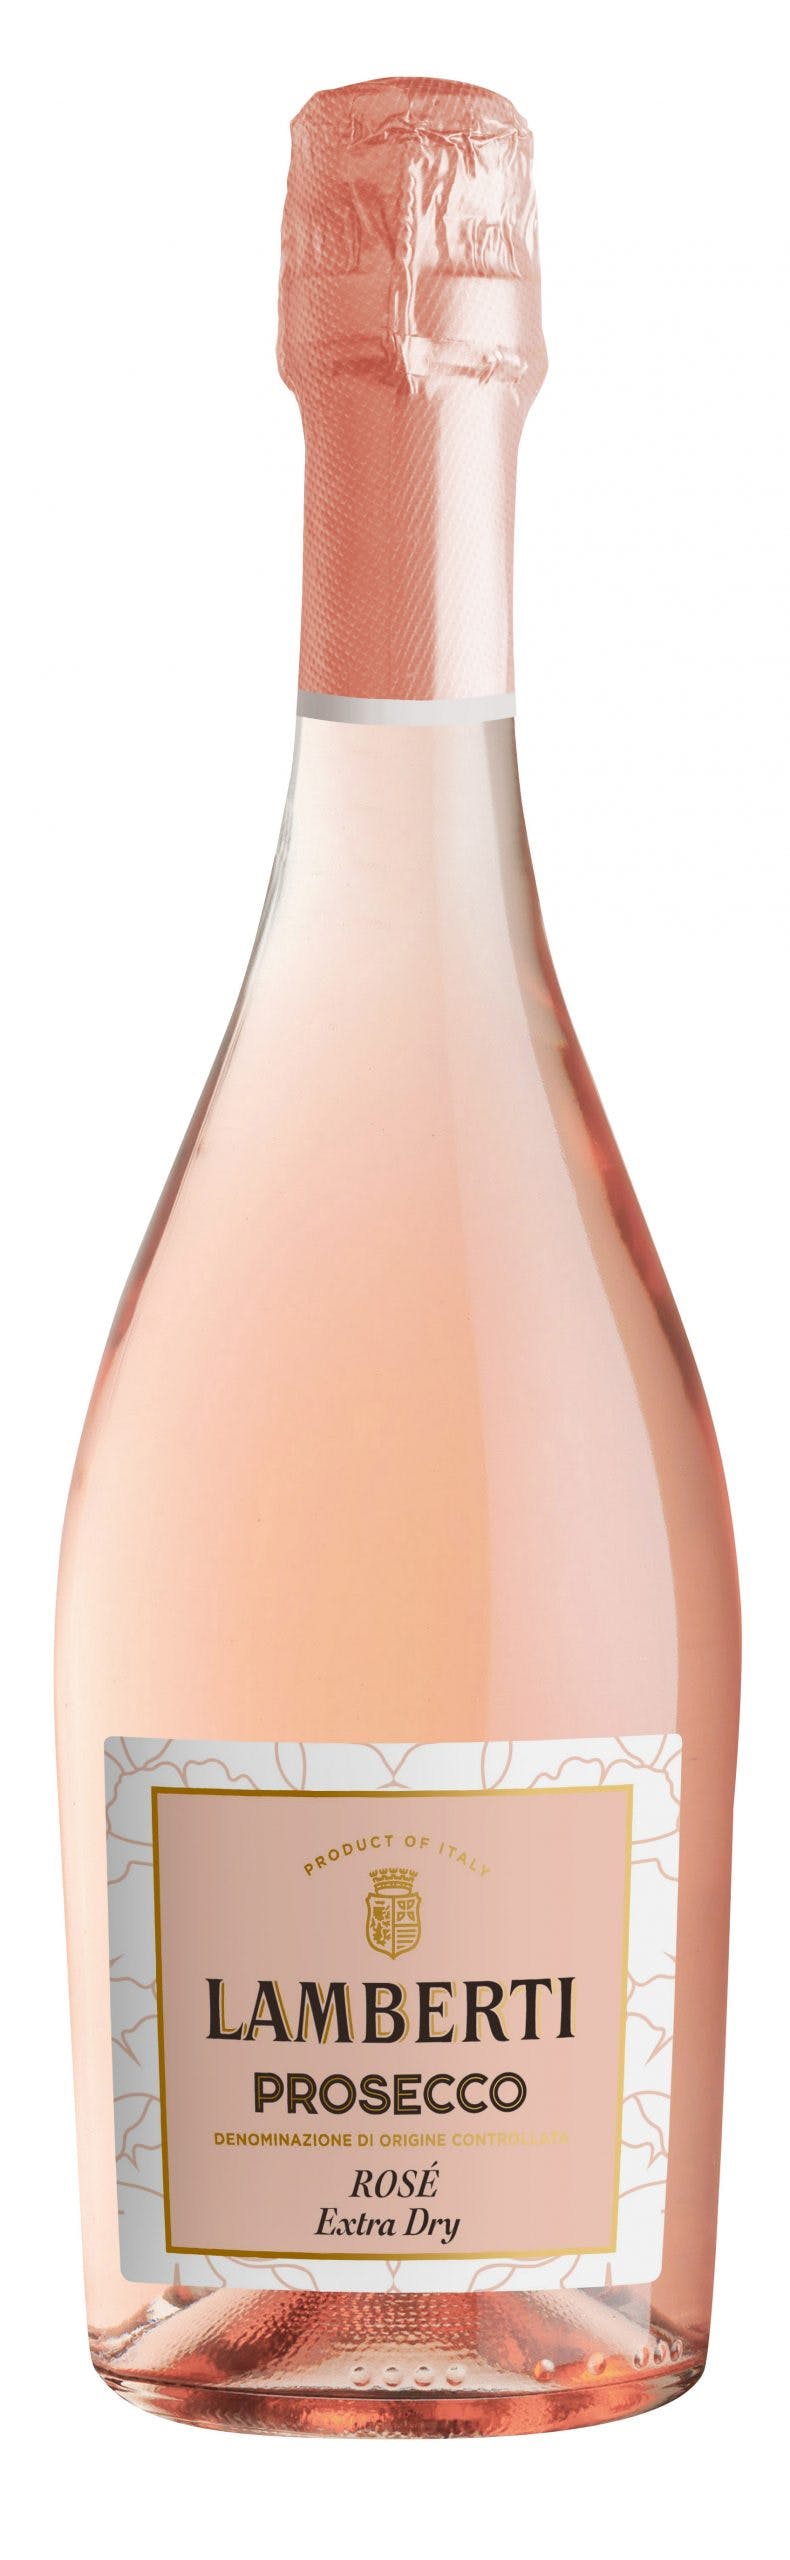 Lamberti Prosecco Rosé Extra Dry 2020